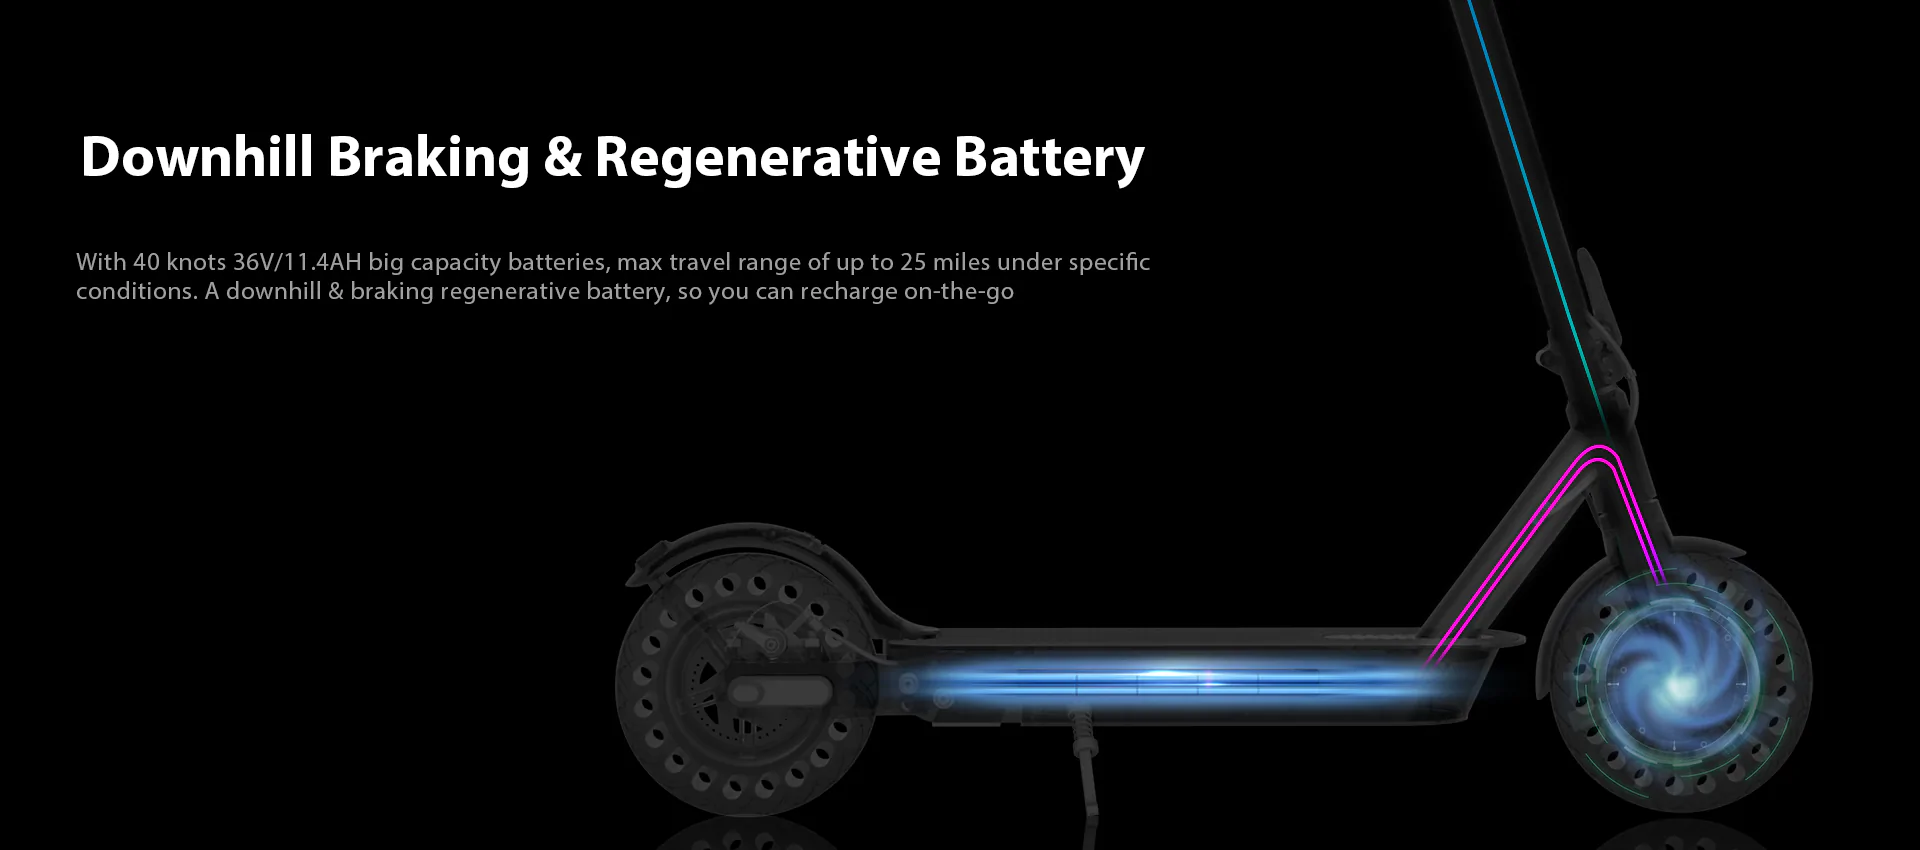 Hiboy S2 Pro Electric Scooter -Downhill Braking - Regenerative Battery